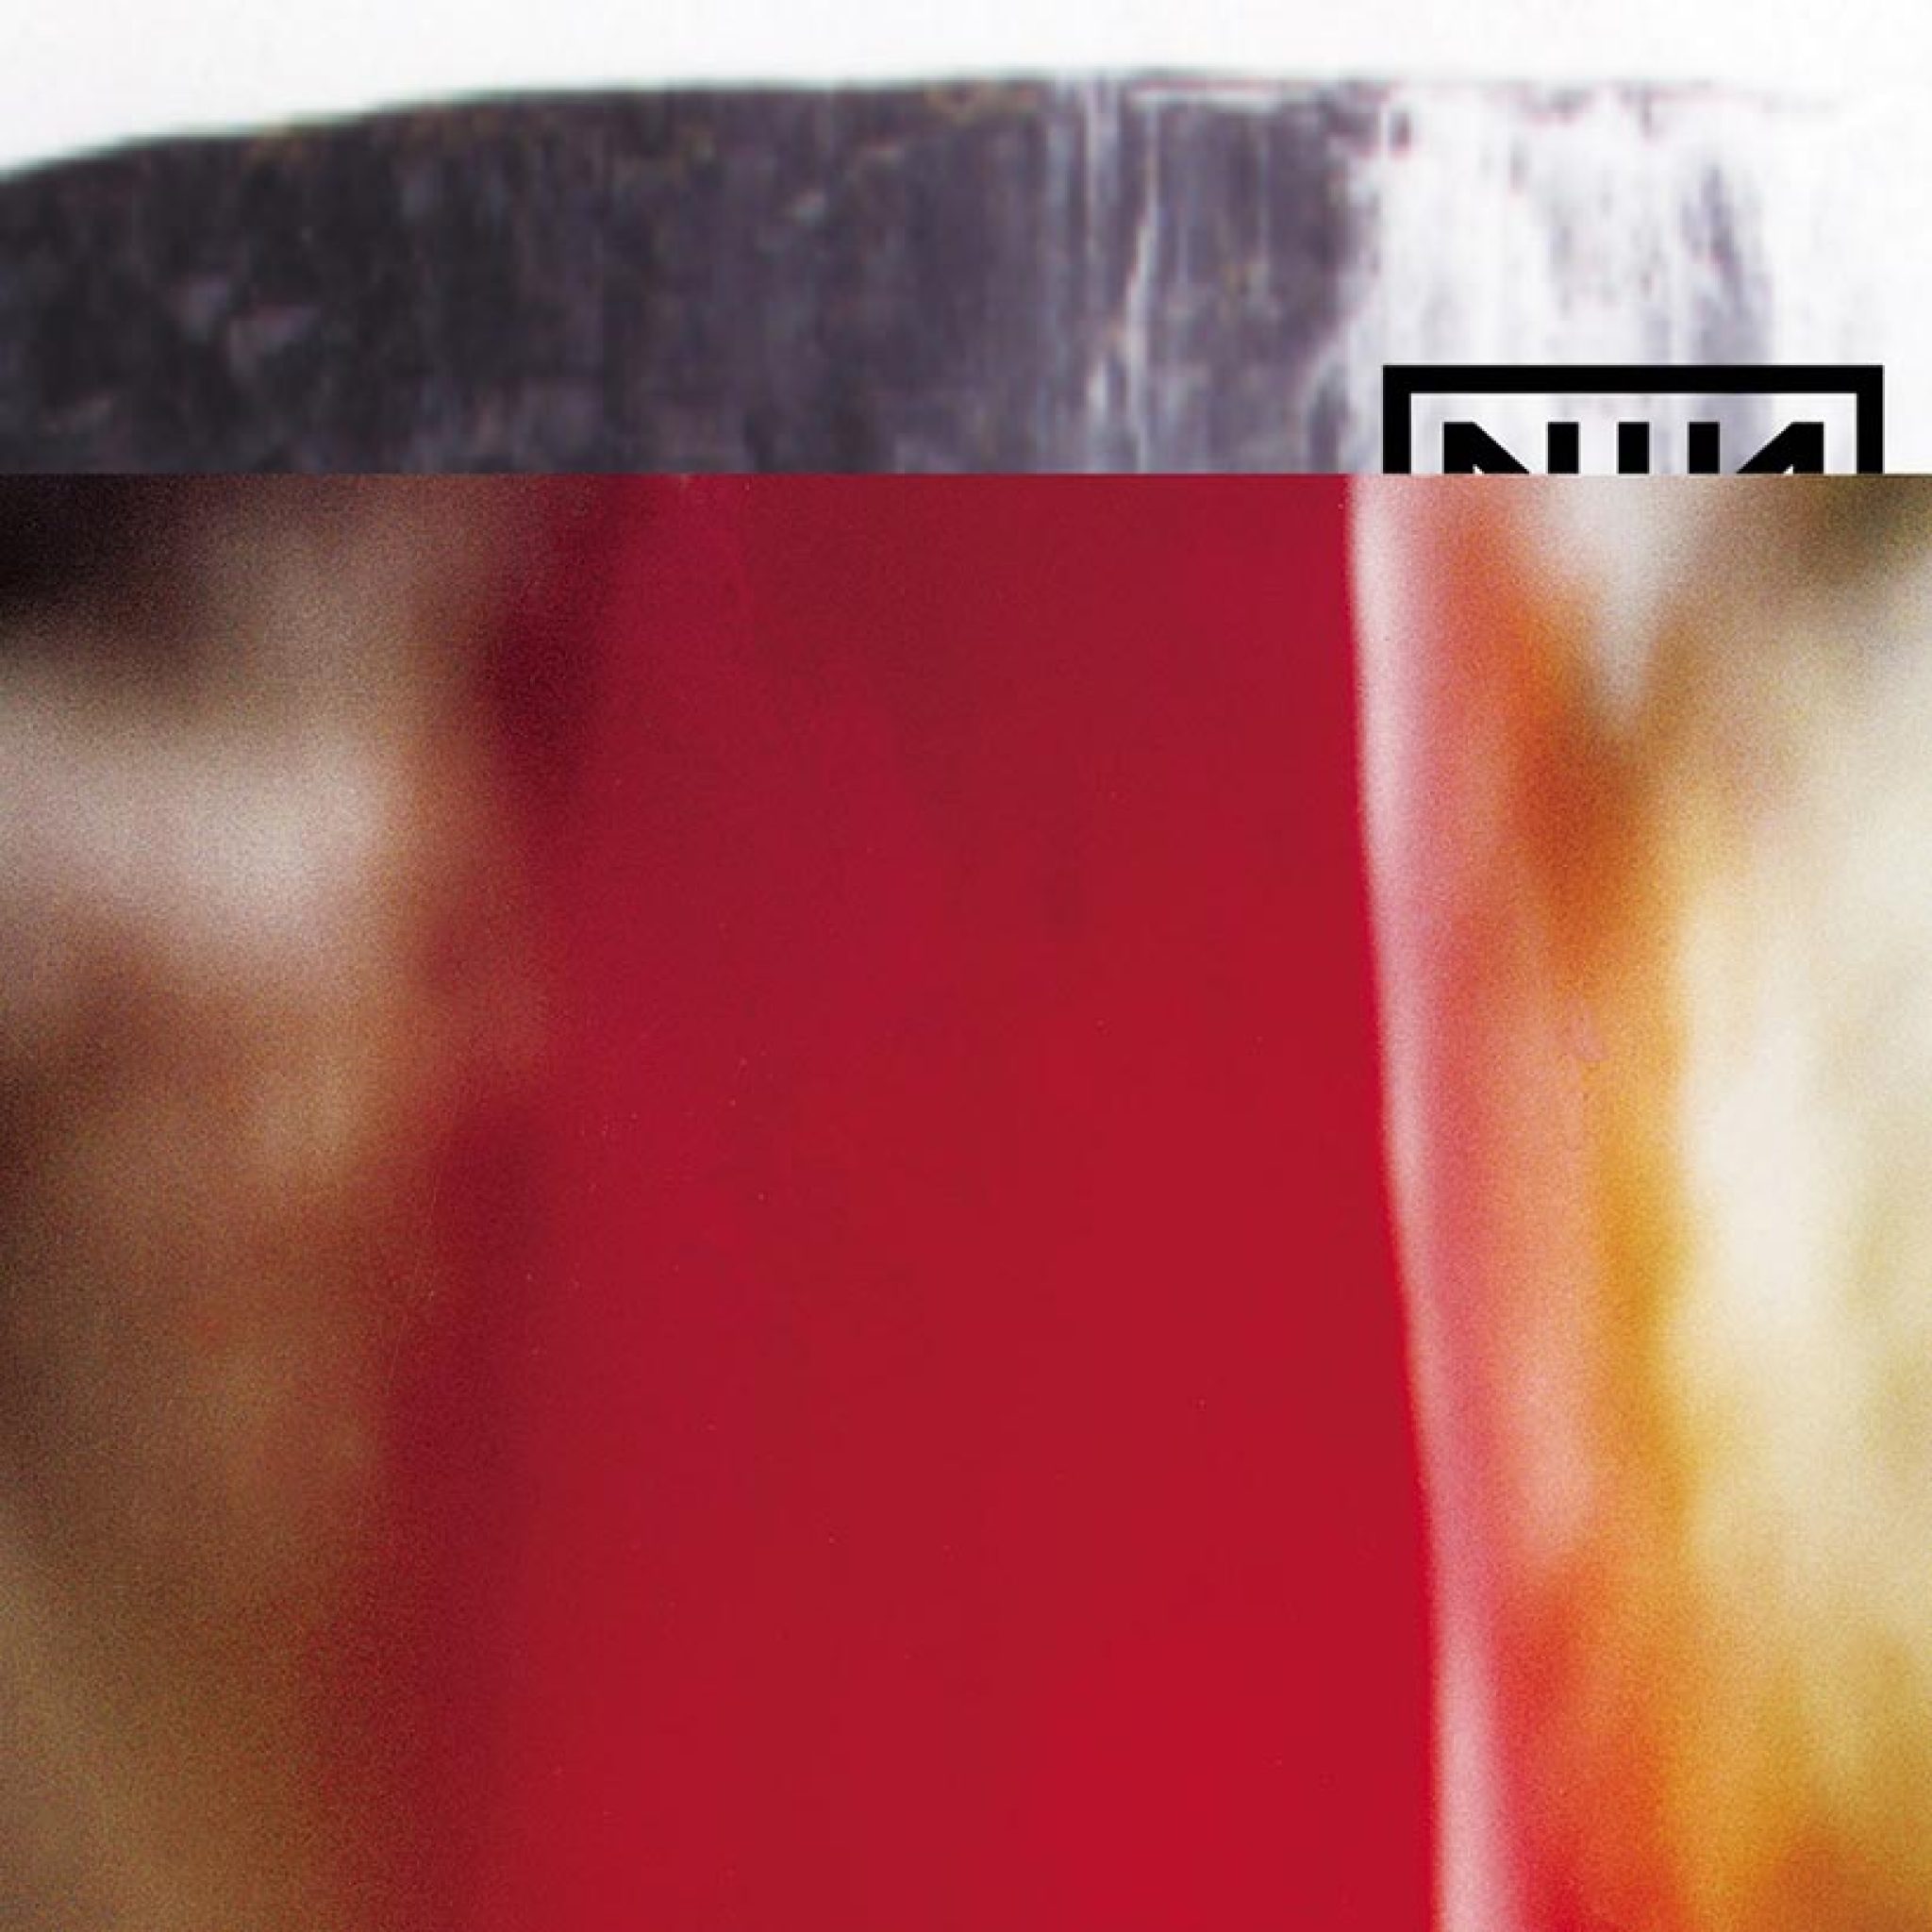 'The Fragile' reDiscover The Landmark Nine Inch Nails Album